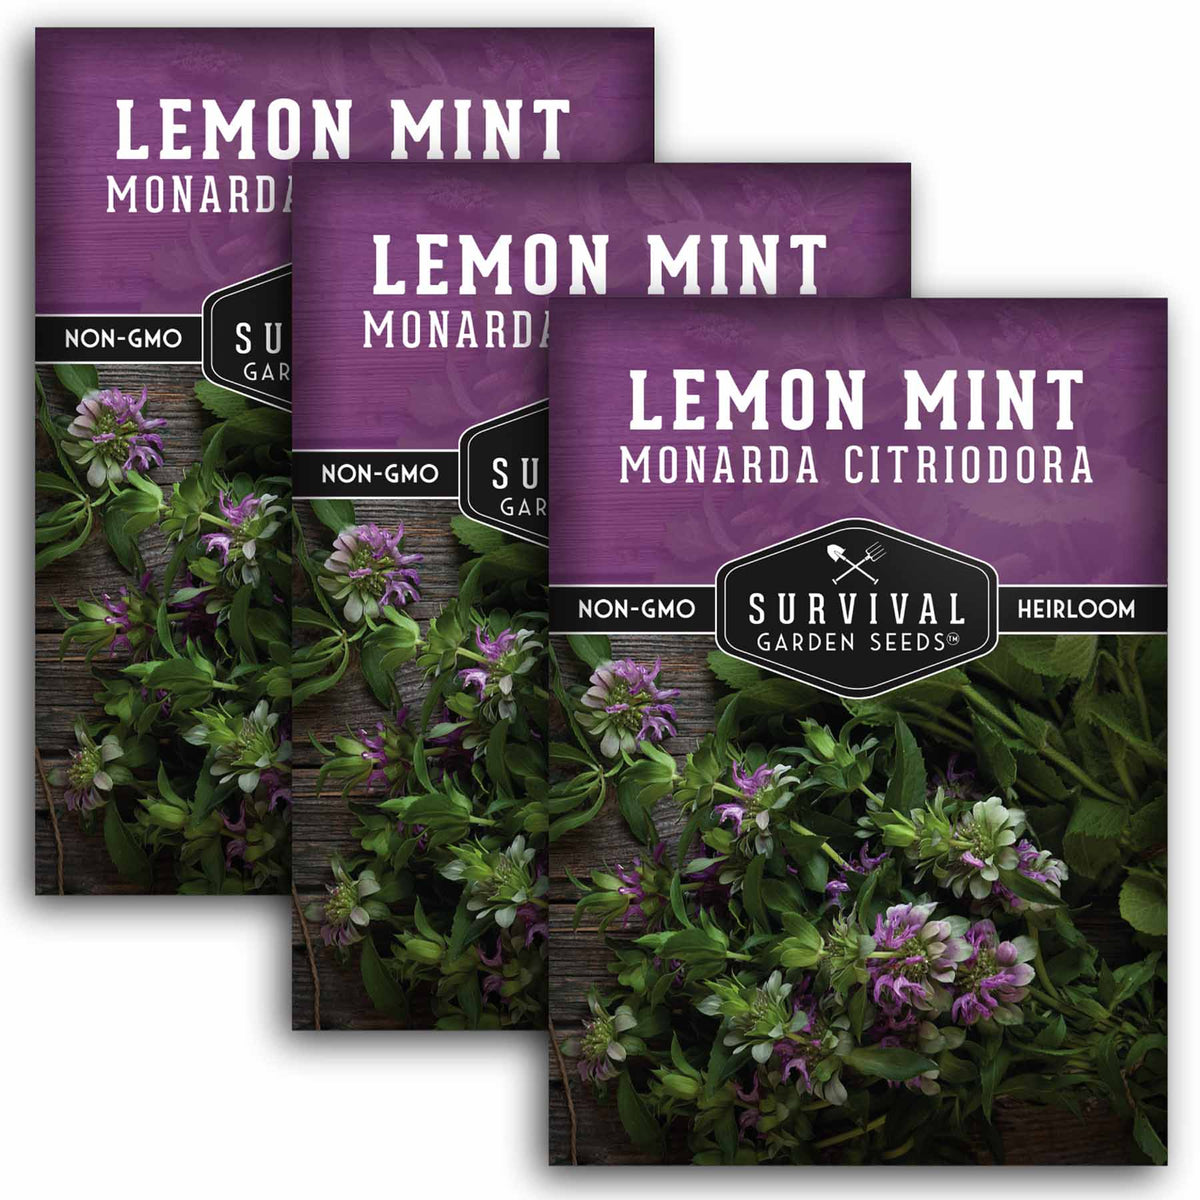 3 Packets of Lemon Mint seeds